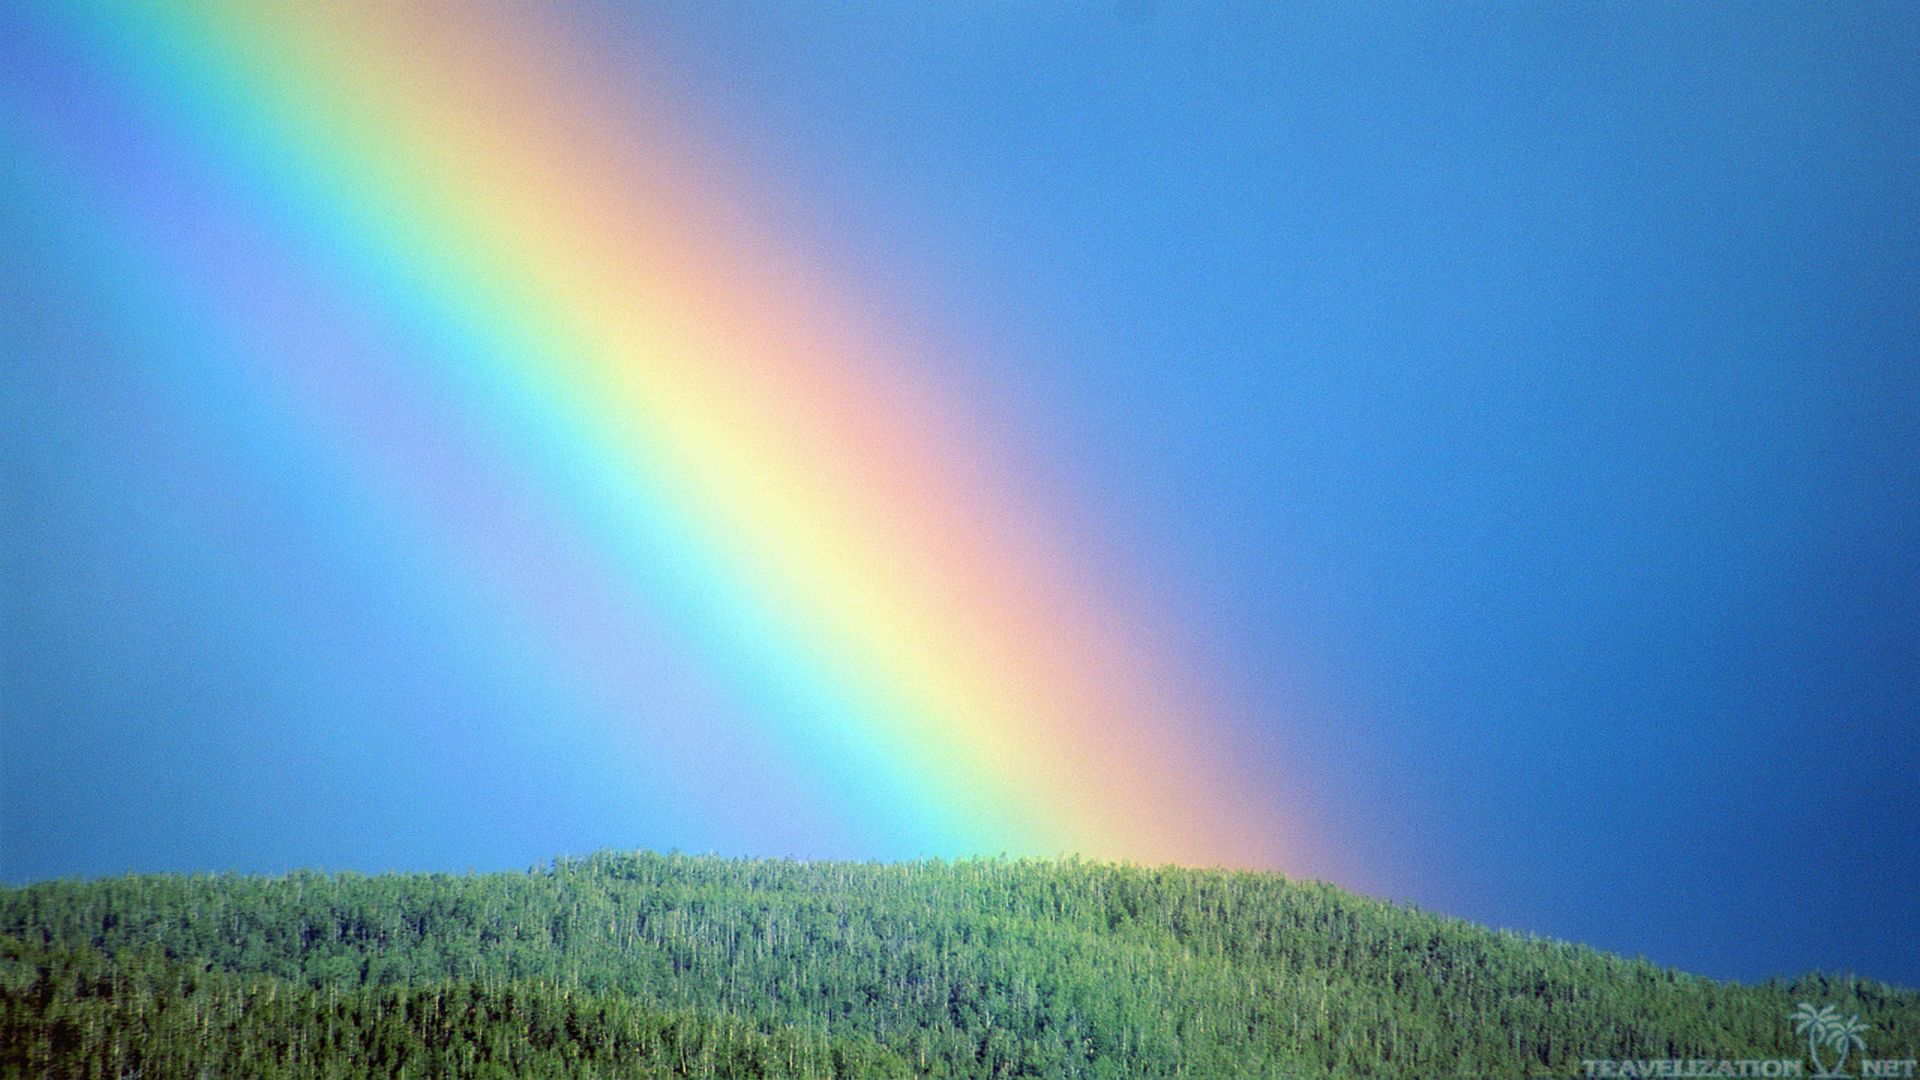 The Rainbow” | WORD UP 411